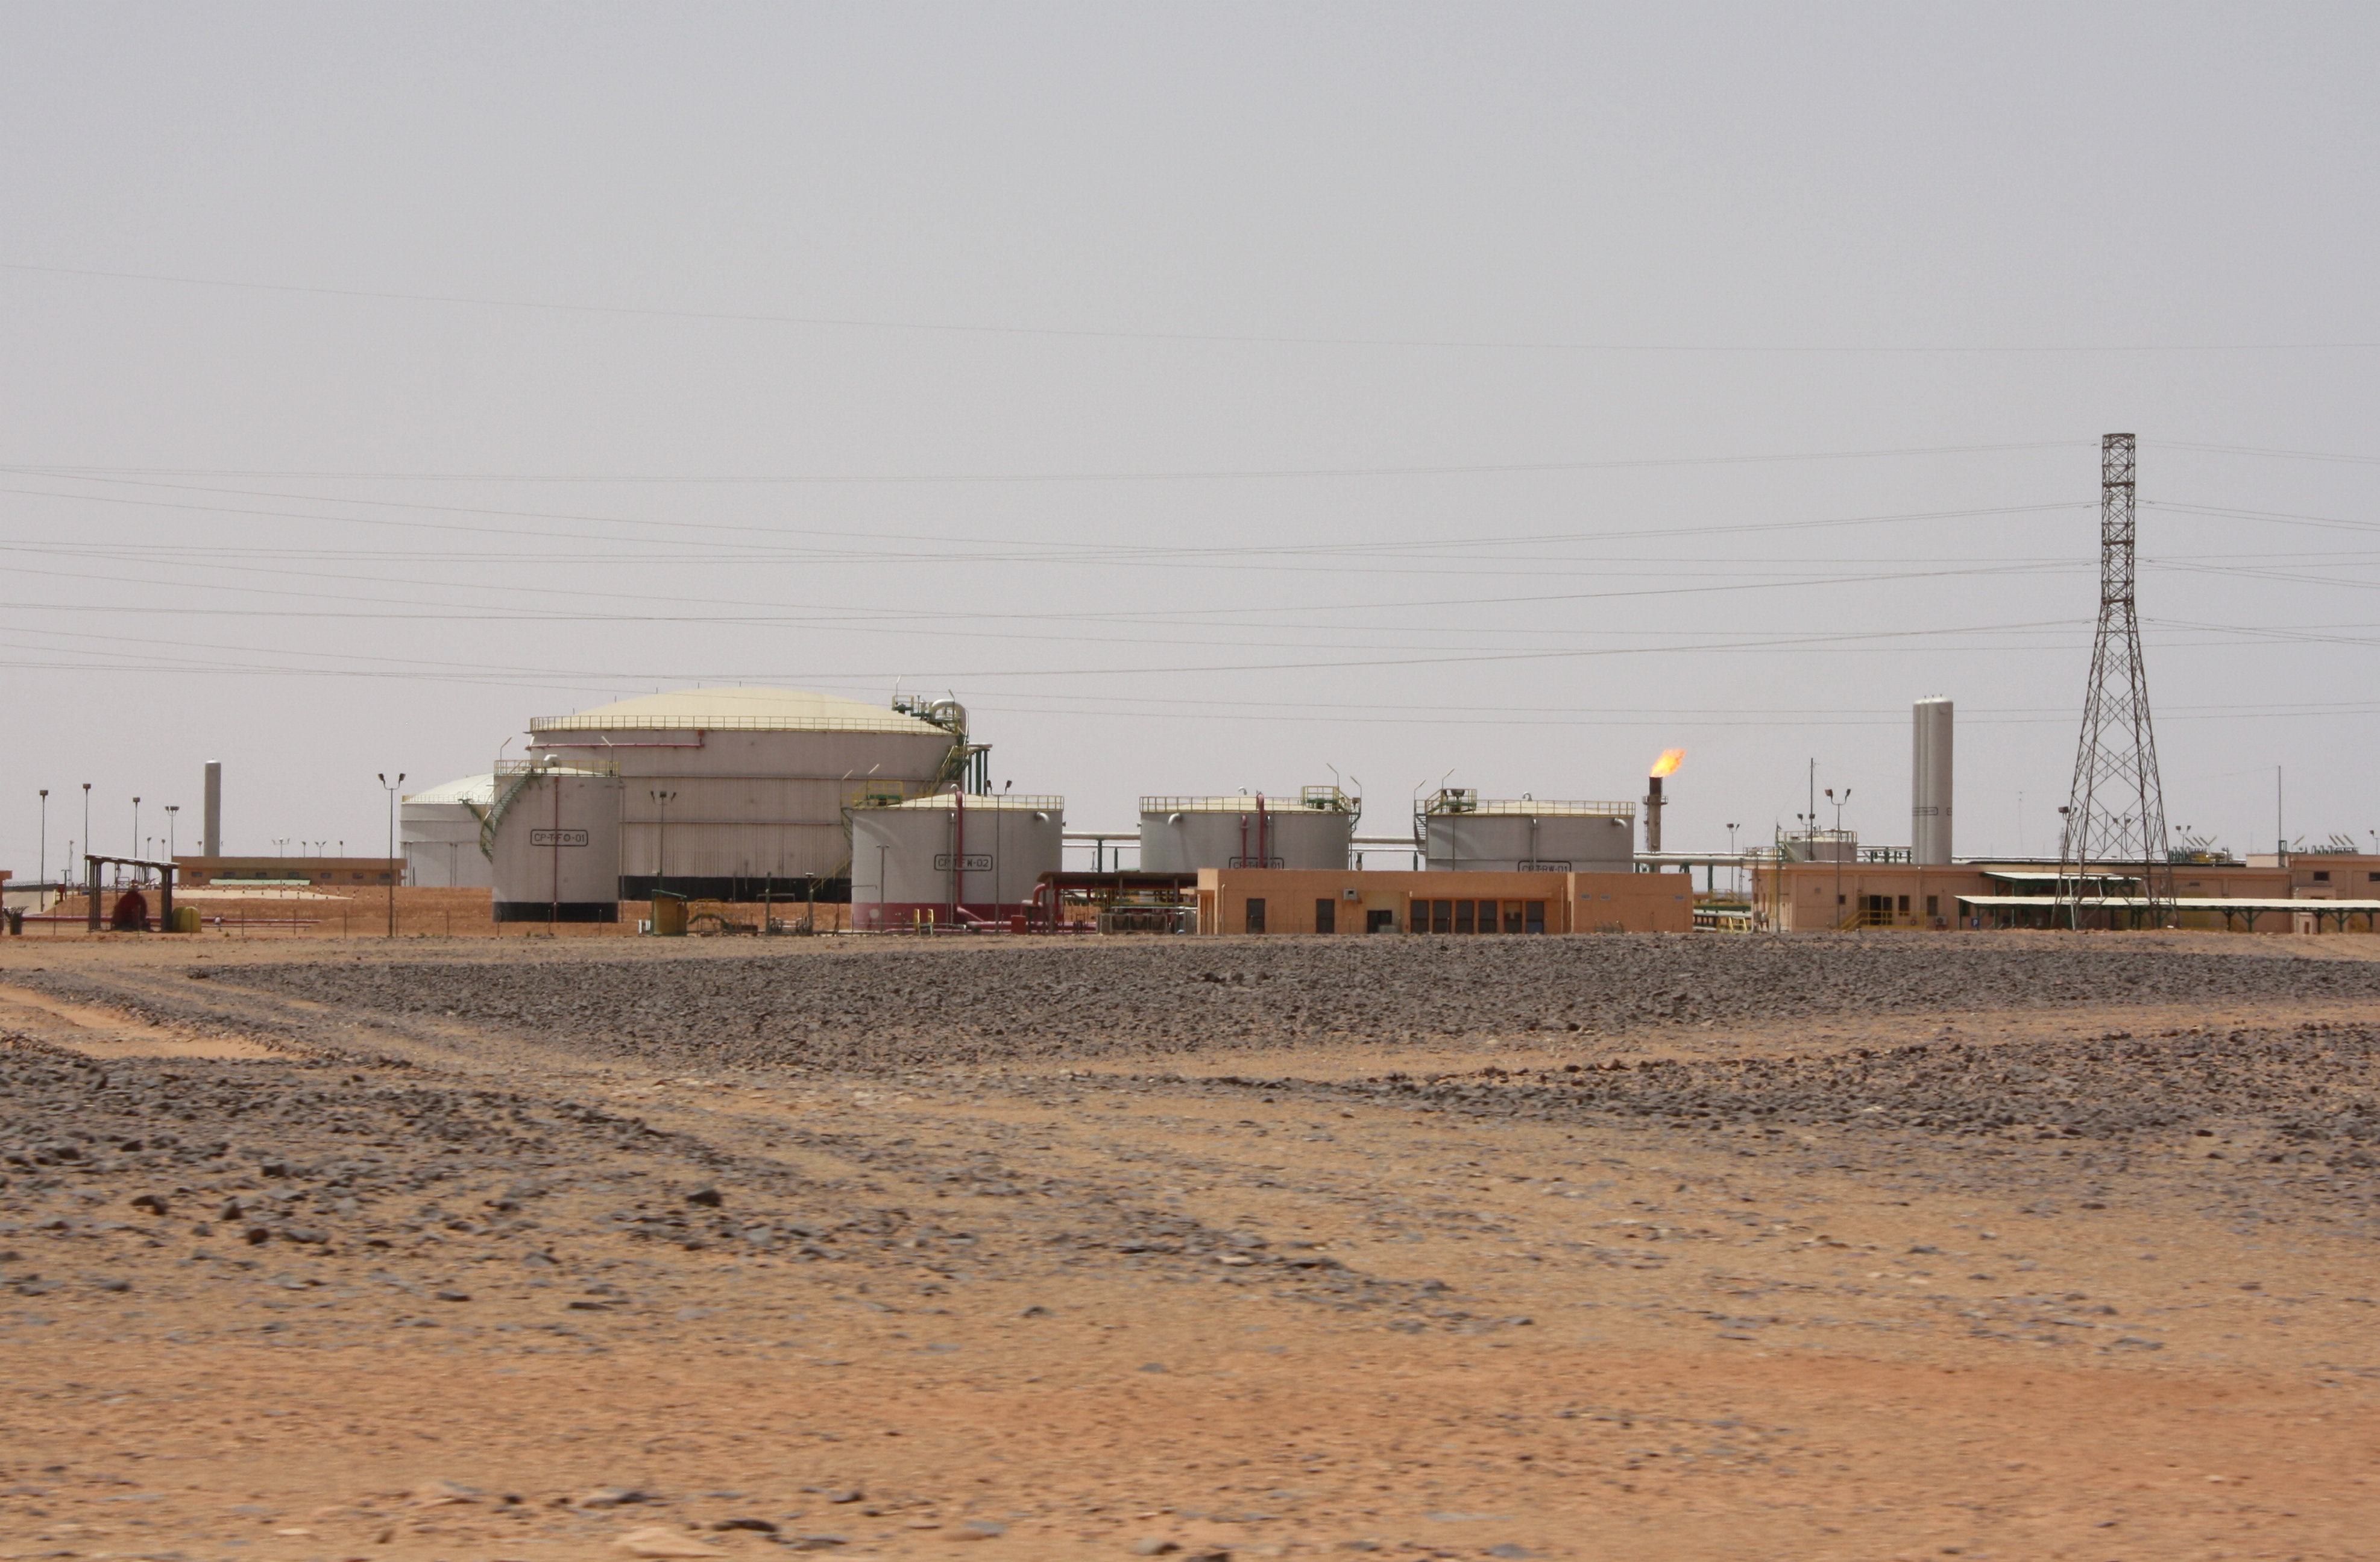 View shows El Feel oil field near Murzuq